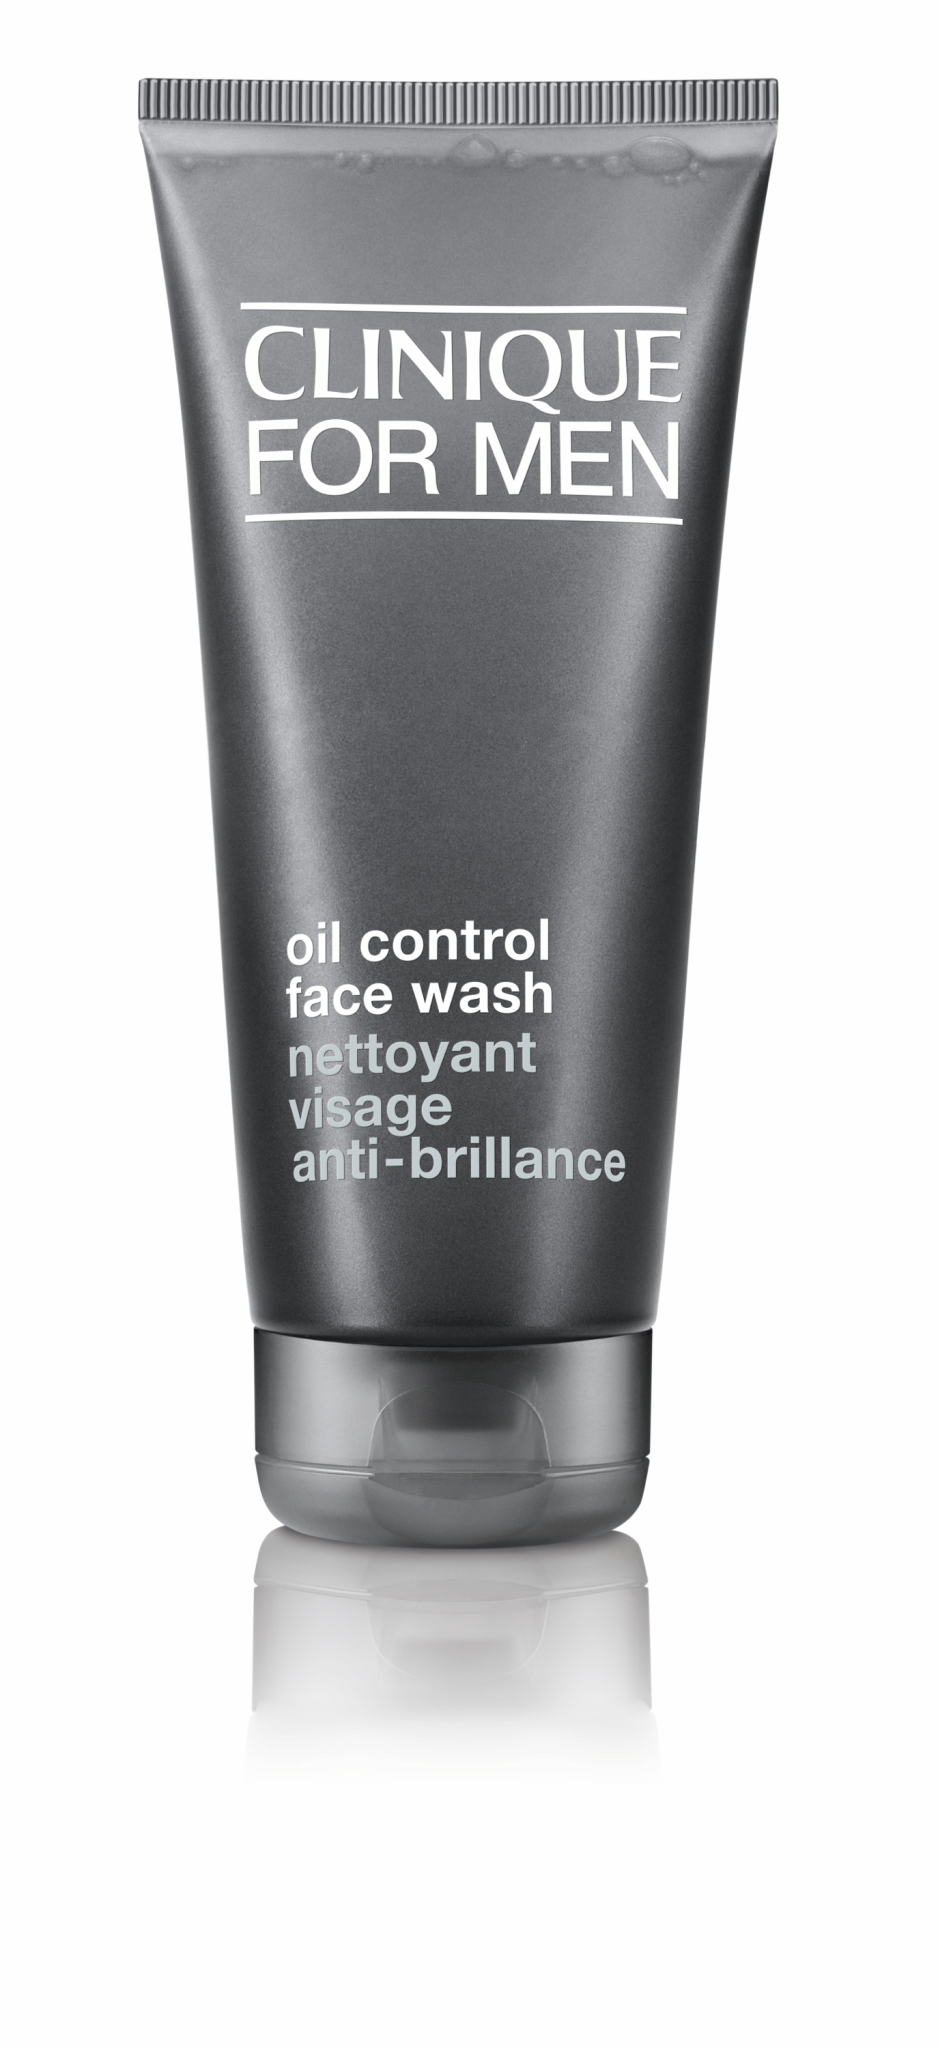  For Men Oil Control Face Wash